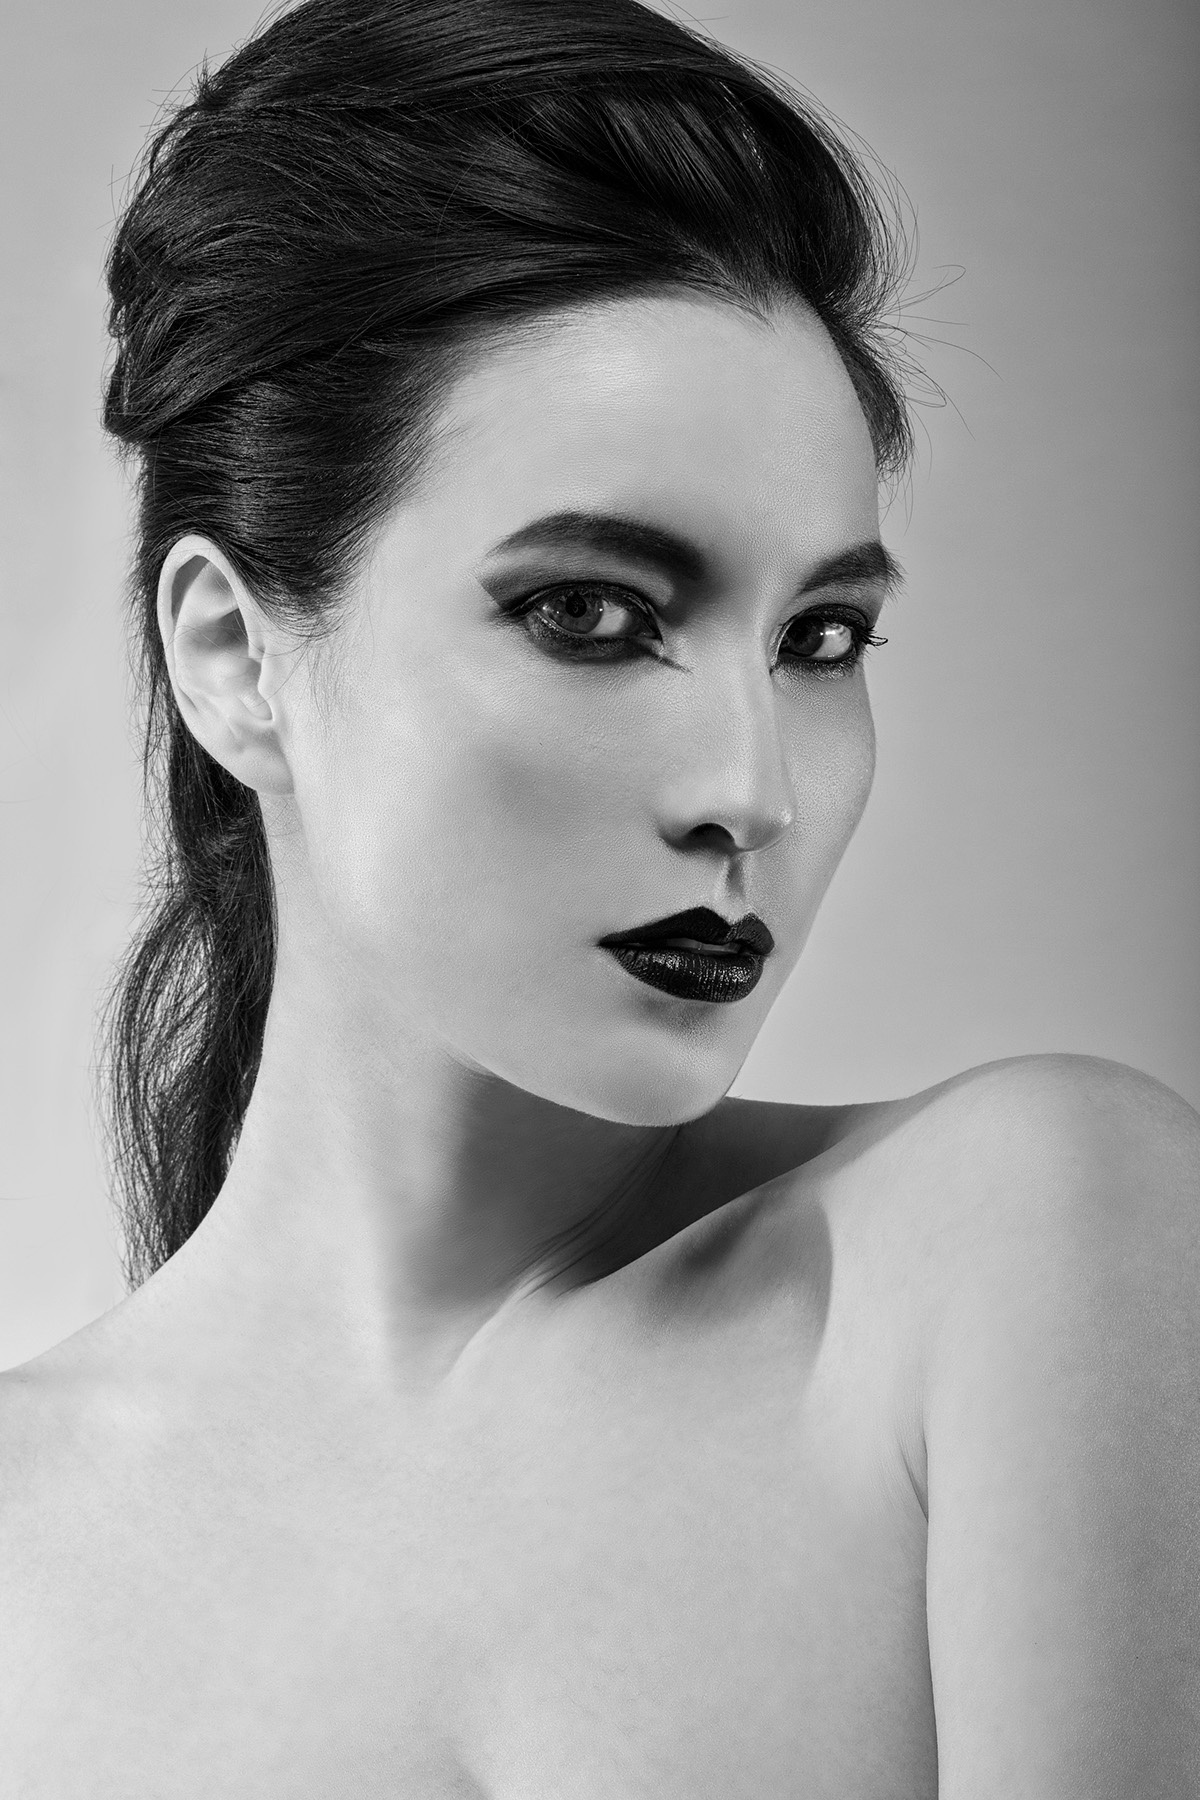 natacha meunier beauty hair girl editorial model makeup toni & guy monochrome black & white Classic French chinese eurasian